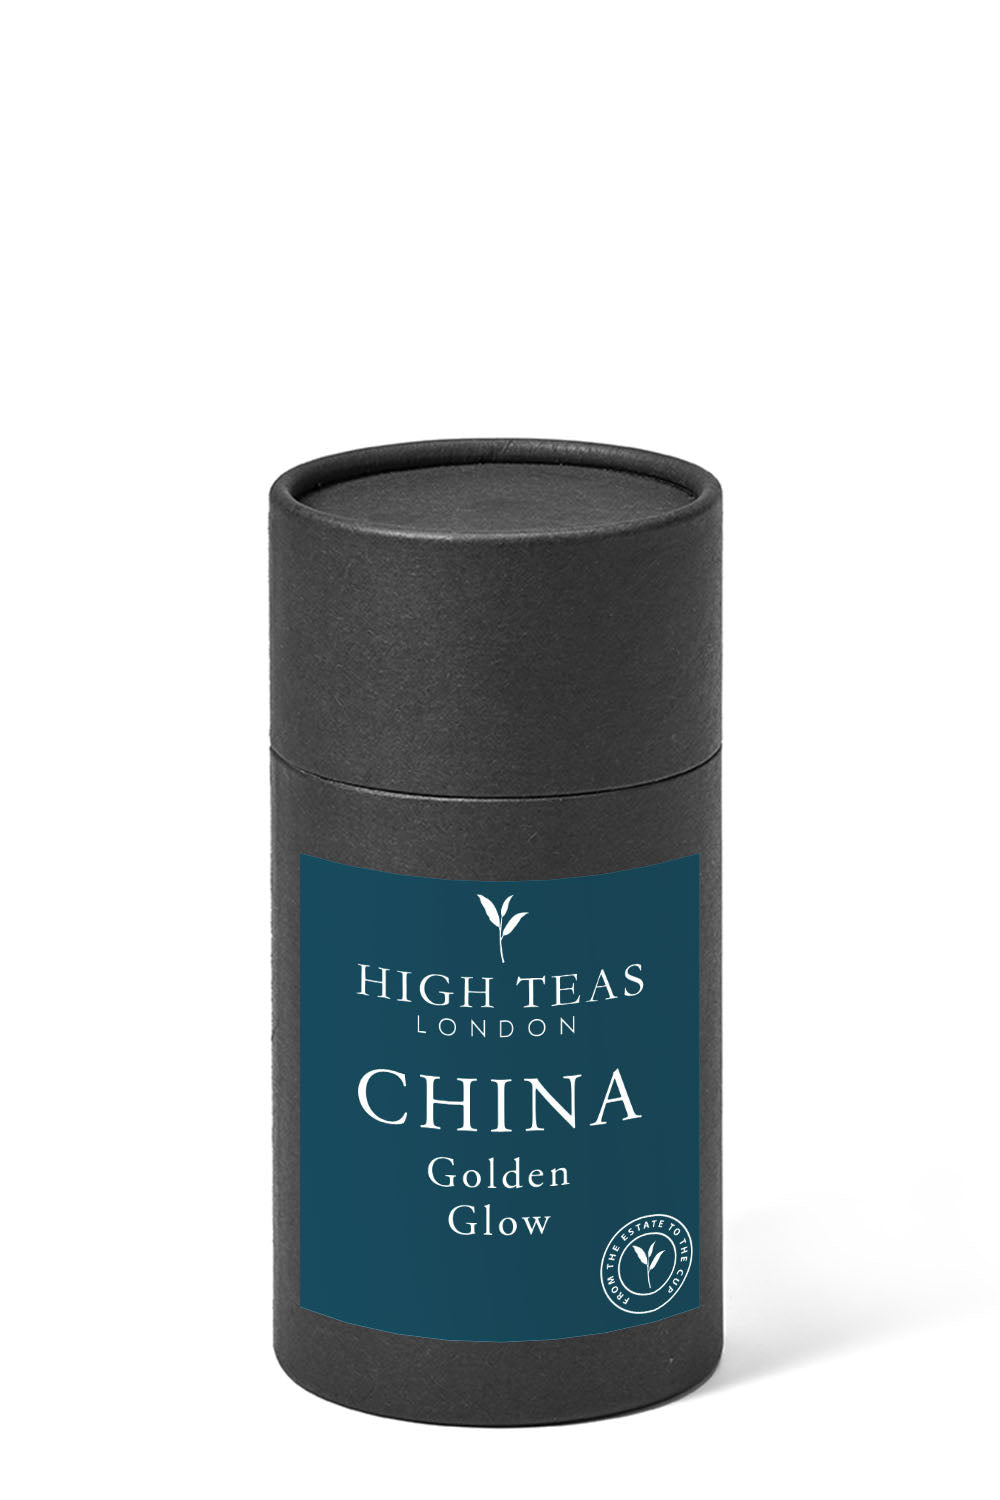 Golden Glow-60g gift-Loose Leaf Tea-High Teas